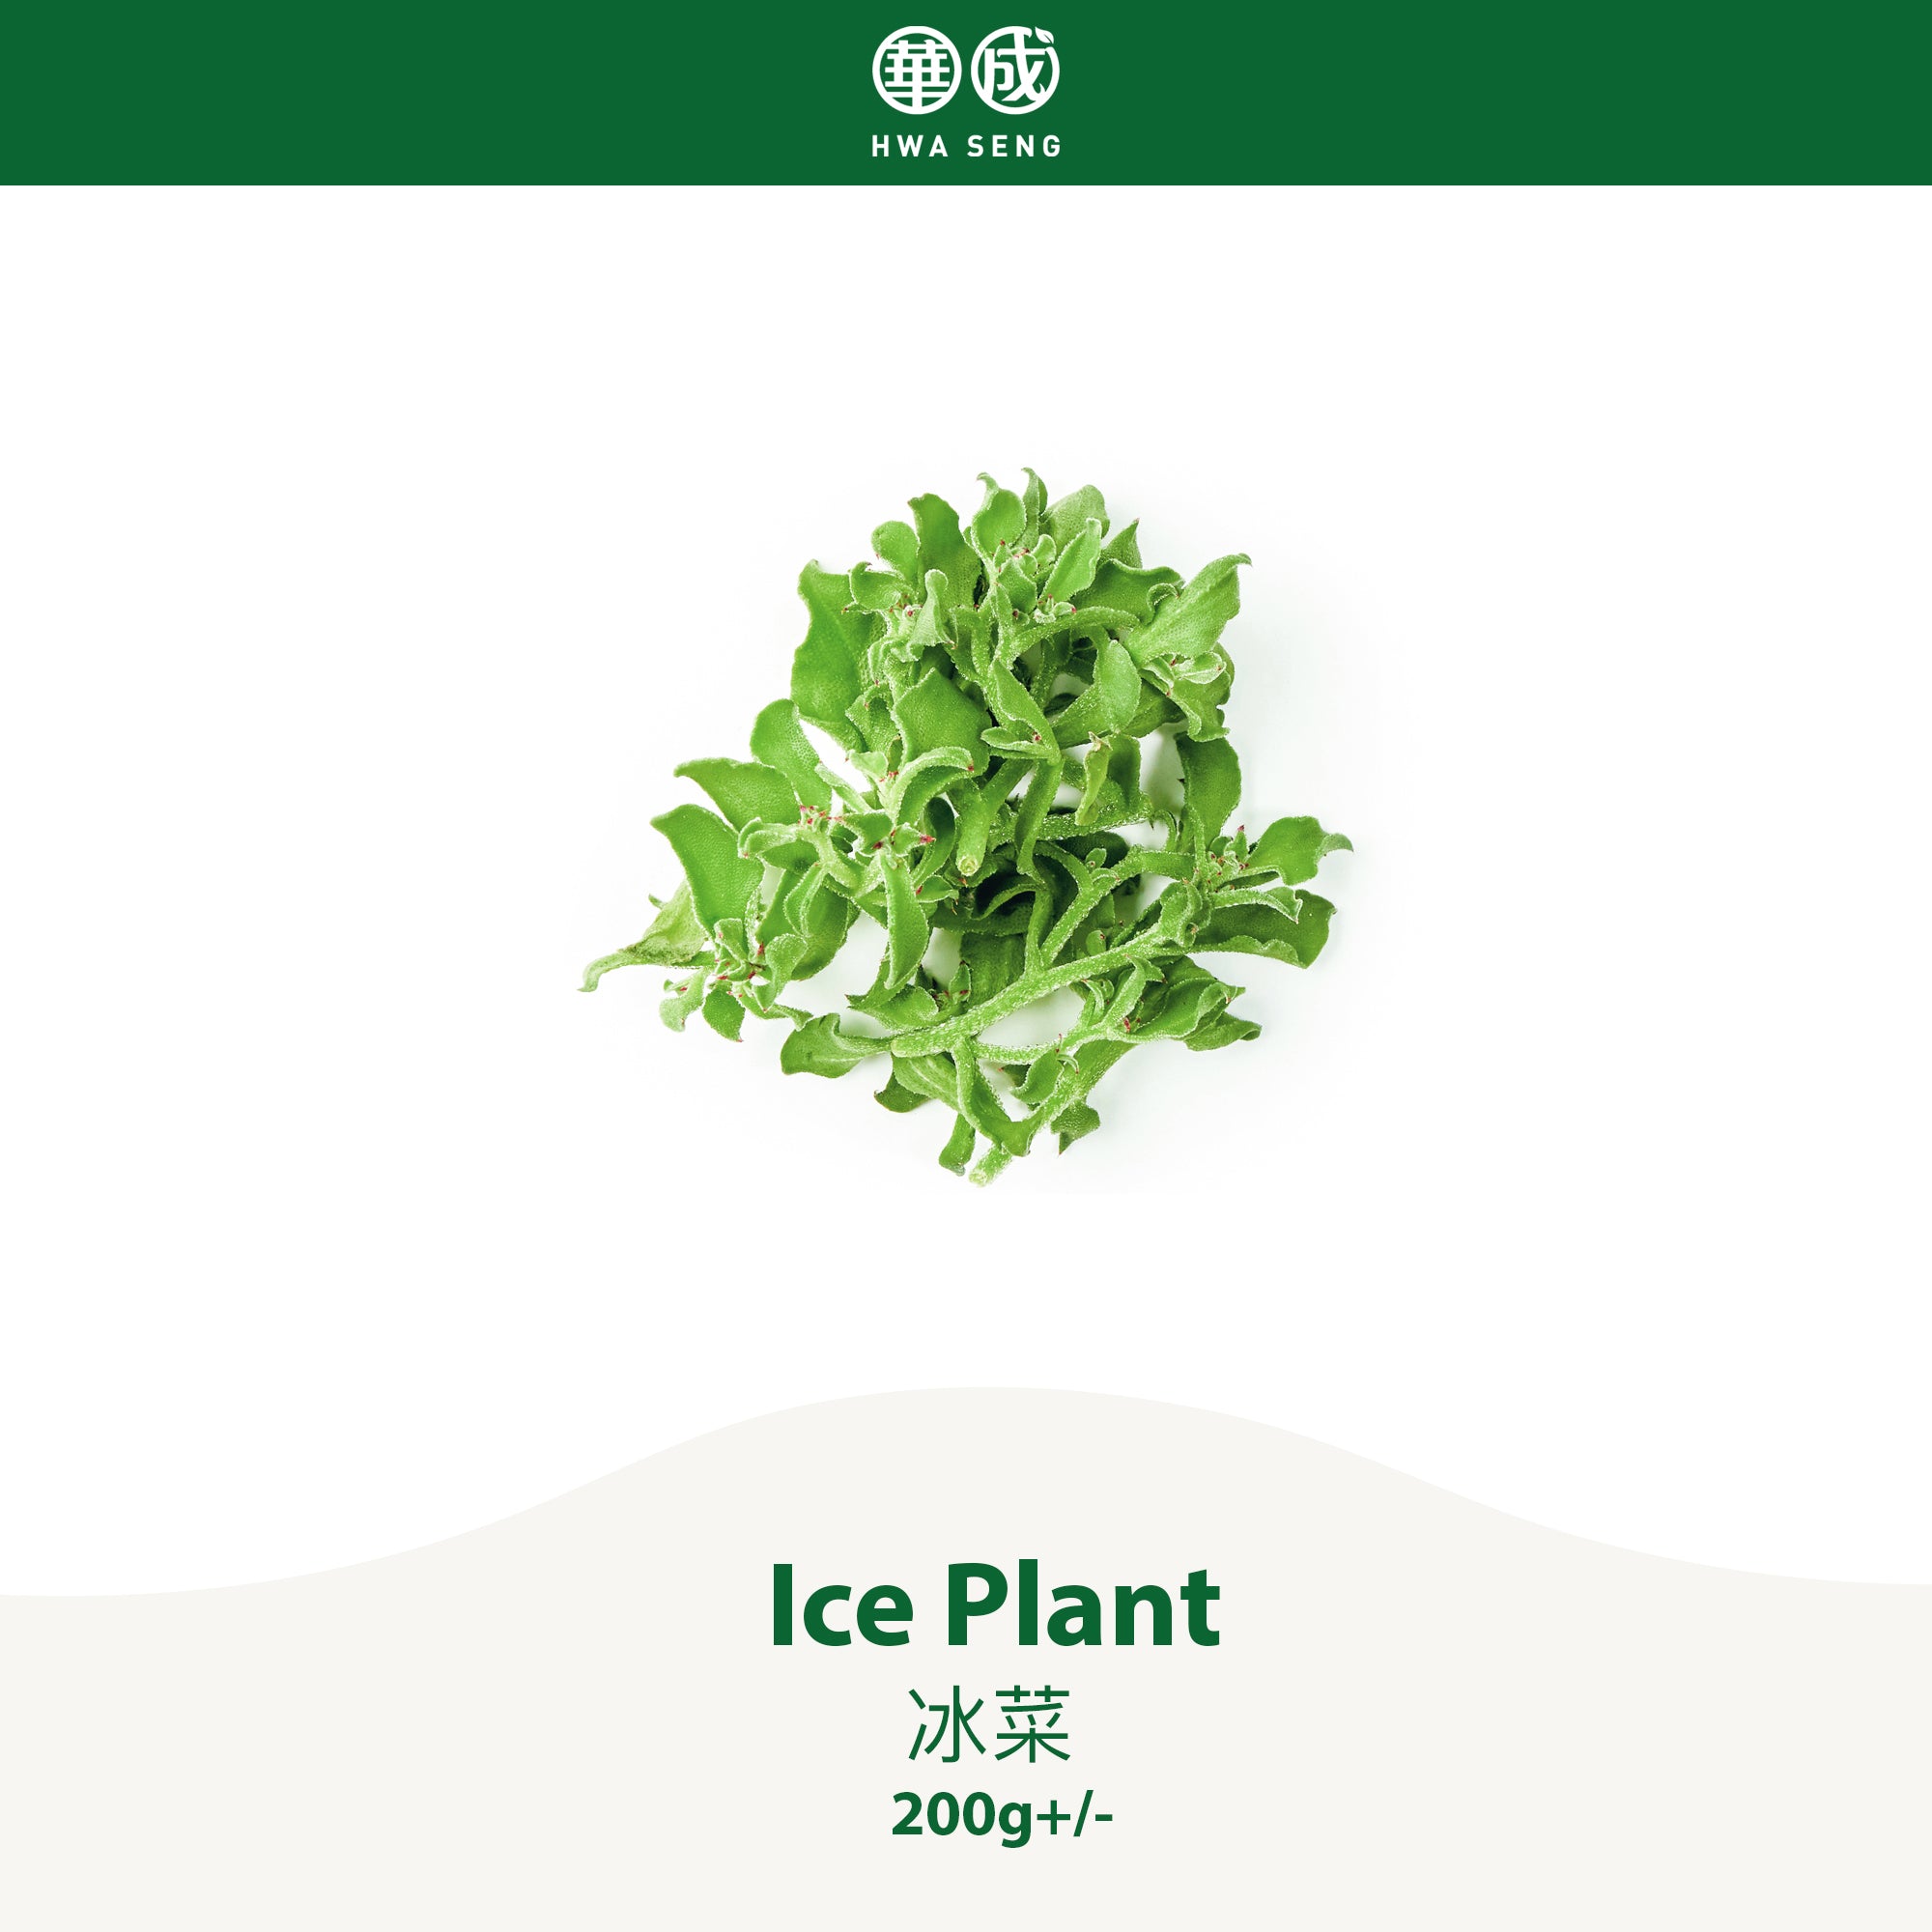 Ice Plant 冰菜 200g+/-